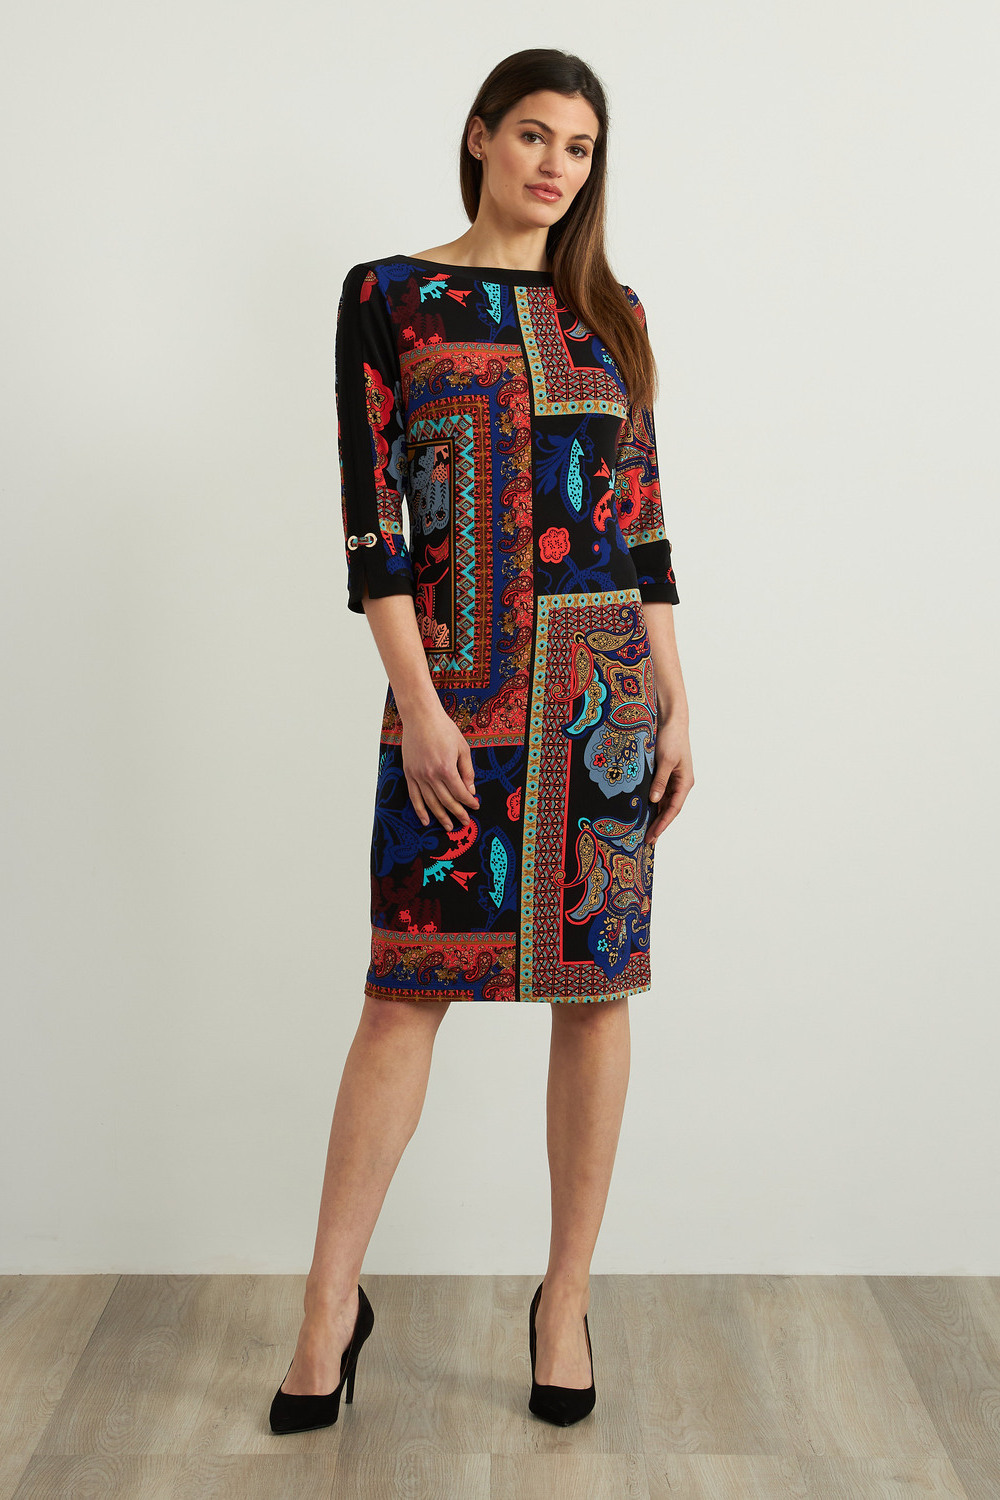 Joseph Ribkoff Mixed Paisley Print Dress Style 213658. Black/multi